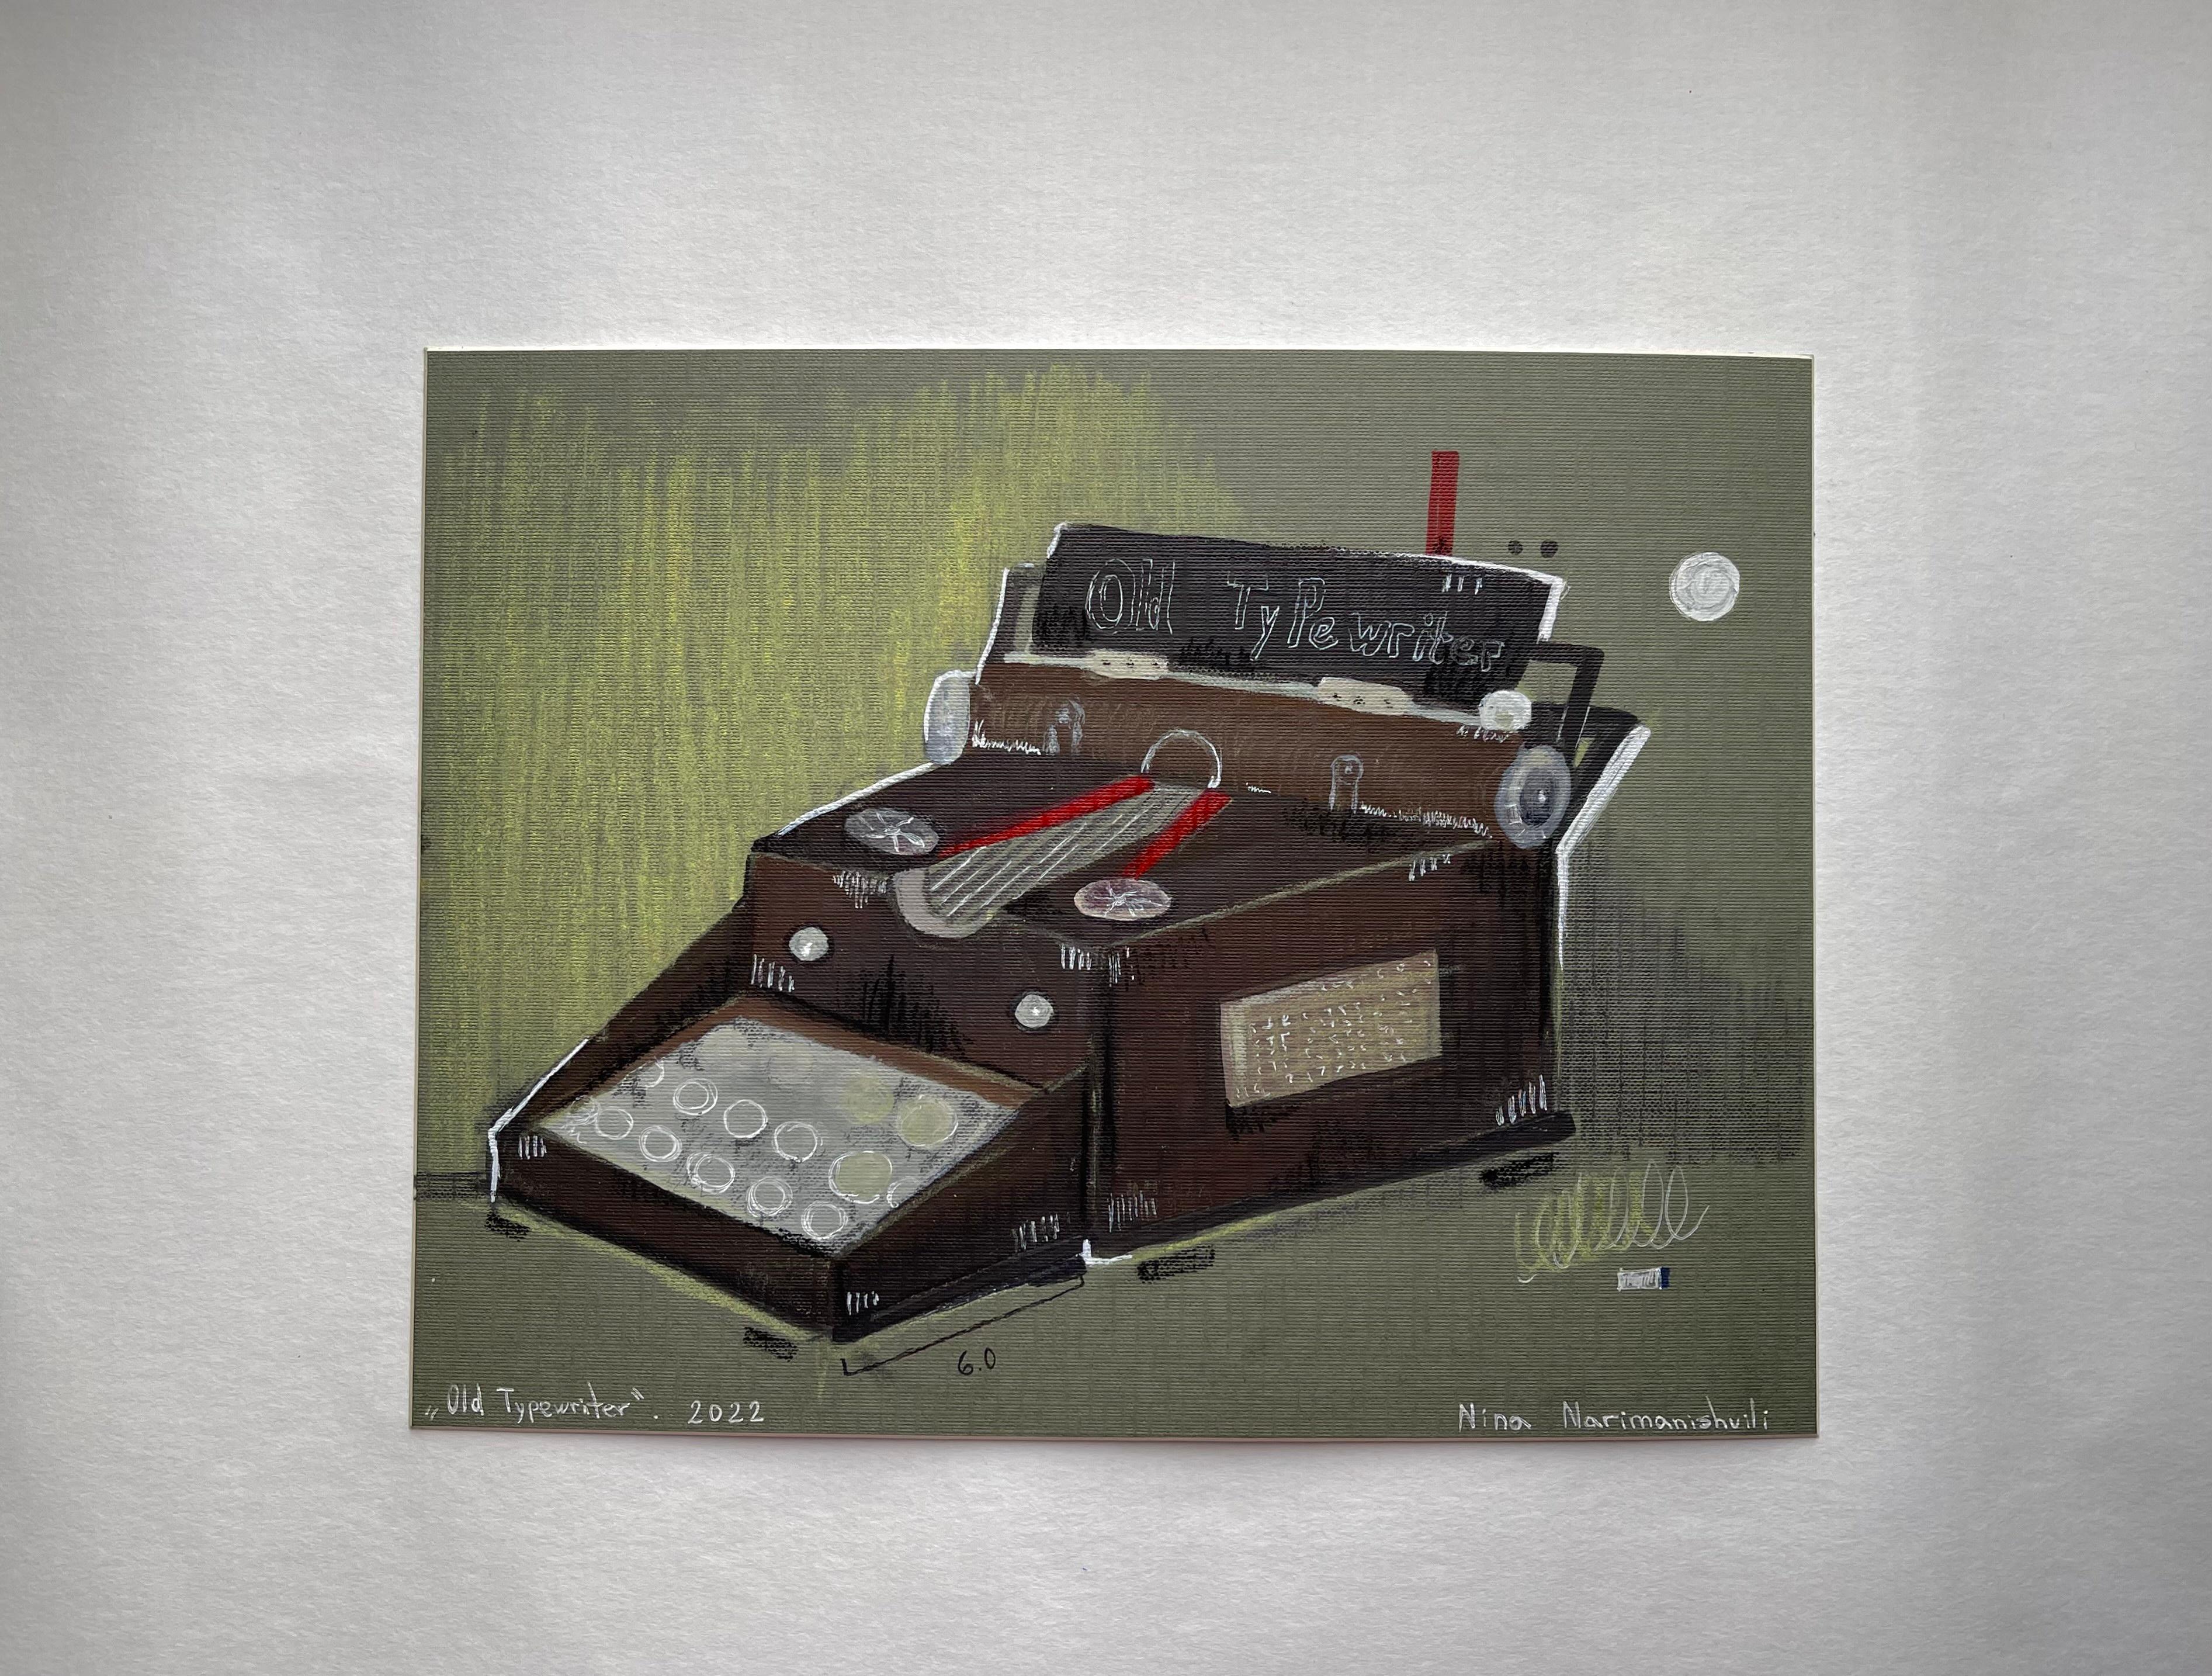 Georgian Contemporary Art by Nina Narimanishvili - Old Typewriter  For Sale 1